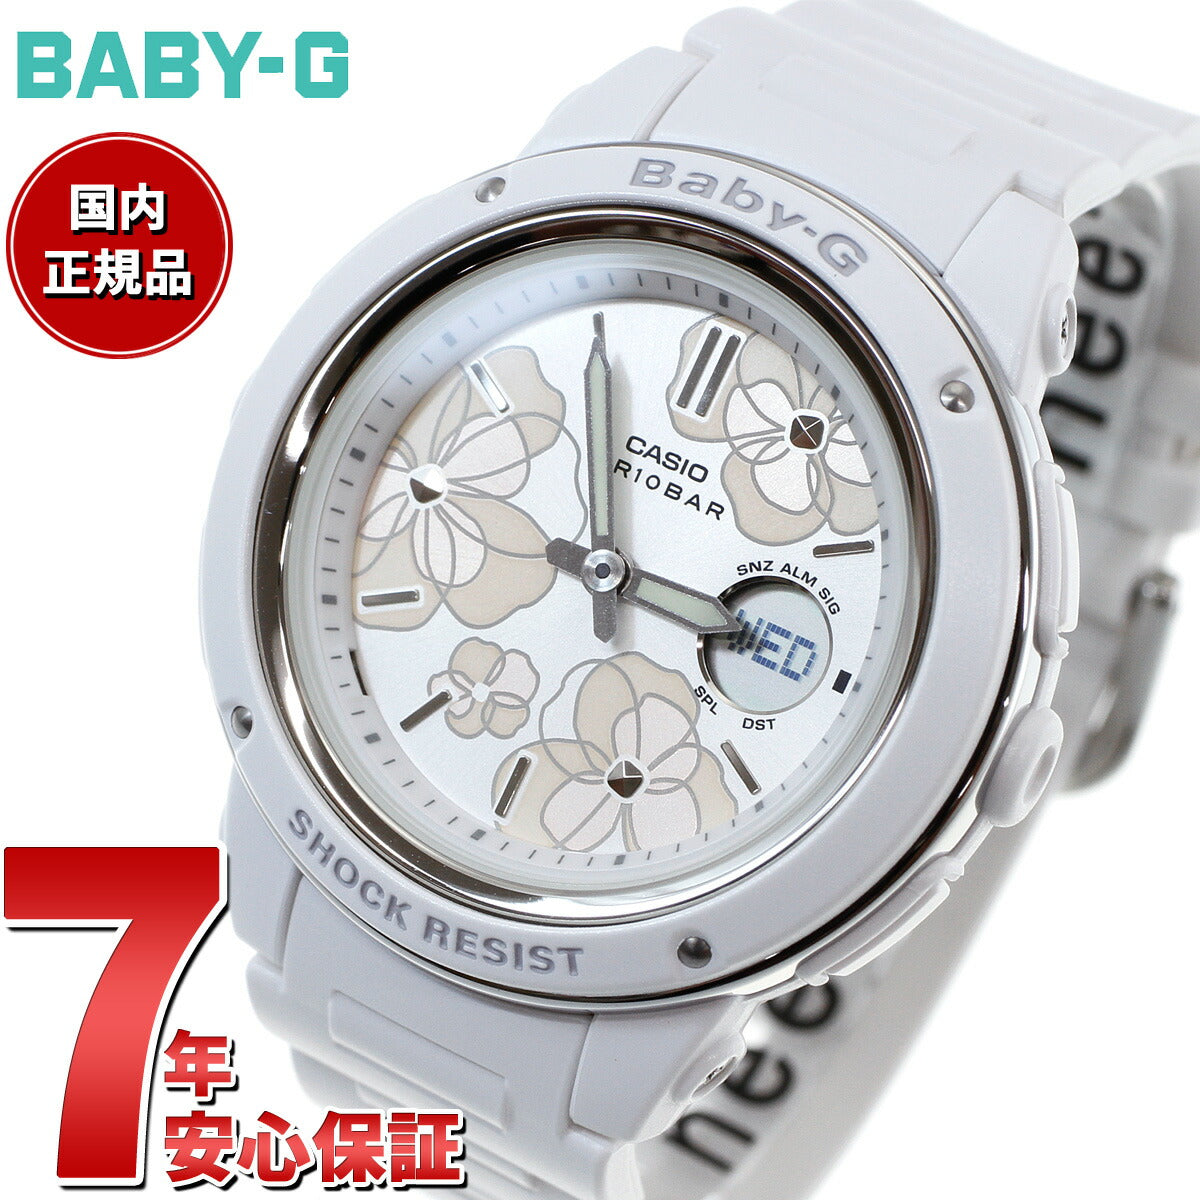 BABY-G カシオ ベビーG レディース 腕時計 フローラル ダイアル 花柄 BGA-150FL-7AJF